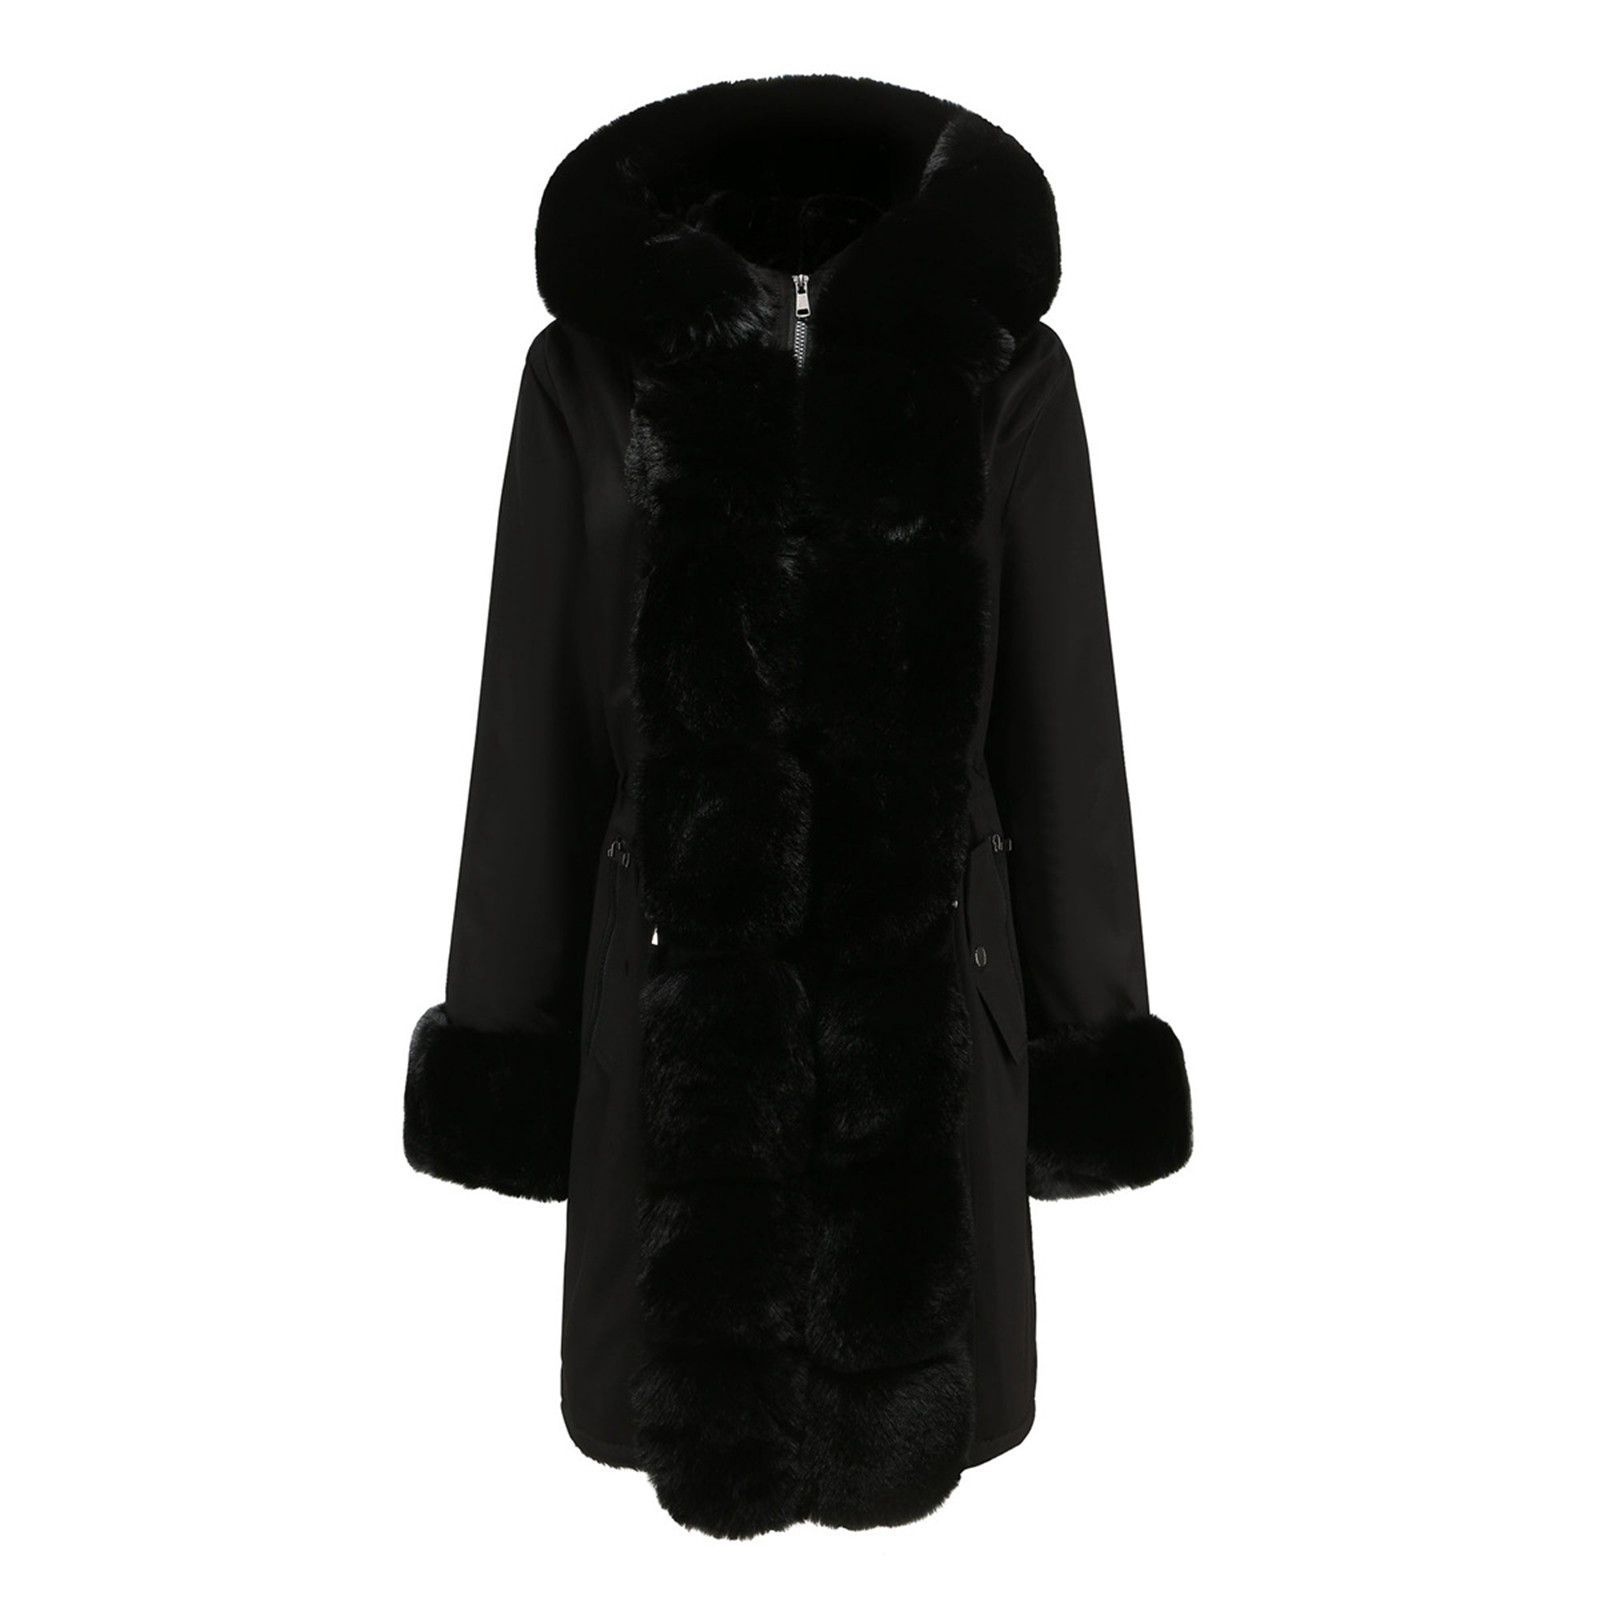 YFPWM Jacket for Women Winter Wrap Cape Coat Fleece Open Front Coat With Pockets Double Sided Winter Coat Light Jacket Casual Slim Fit Jacket Short Blouse - image 1 of 6